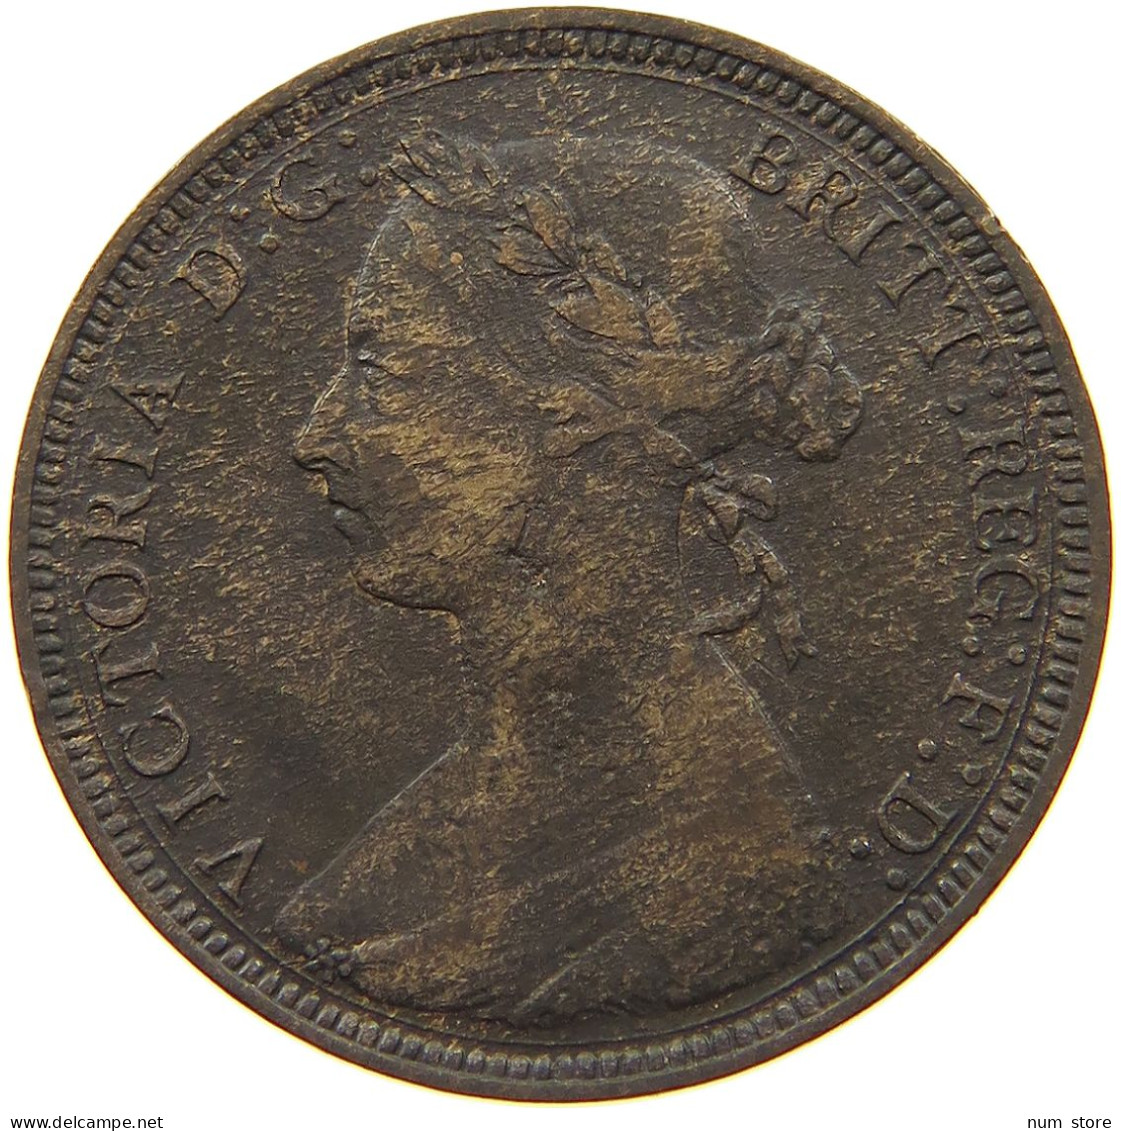 GREAT BRITAIN HALFPENNY 1889 Victoria 1837-1901 #a011 0413 - C. 1/2 Penny